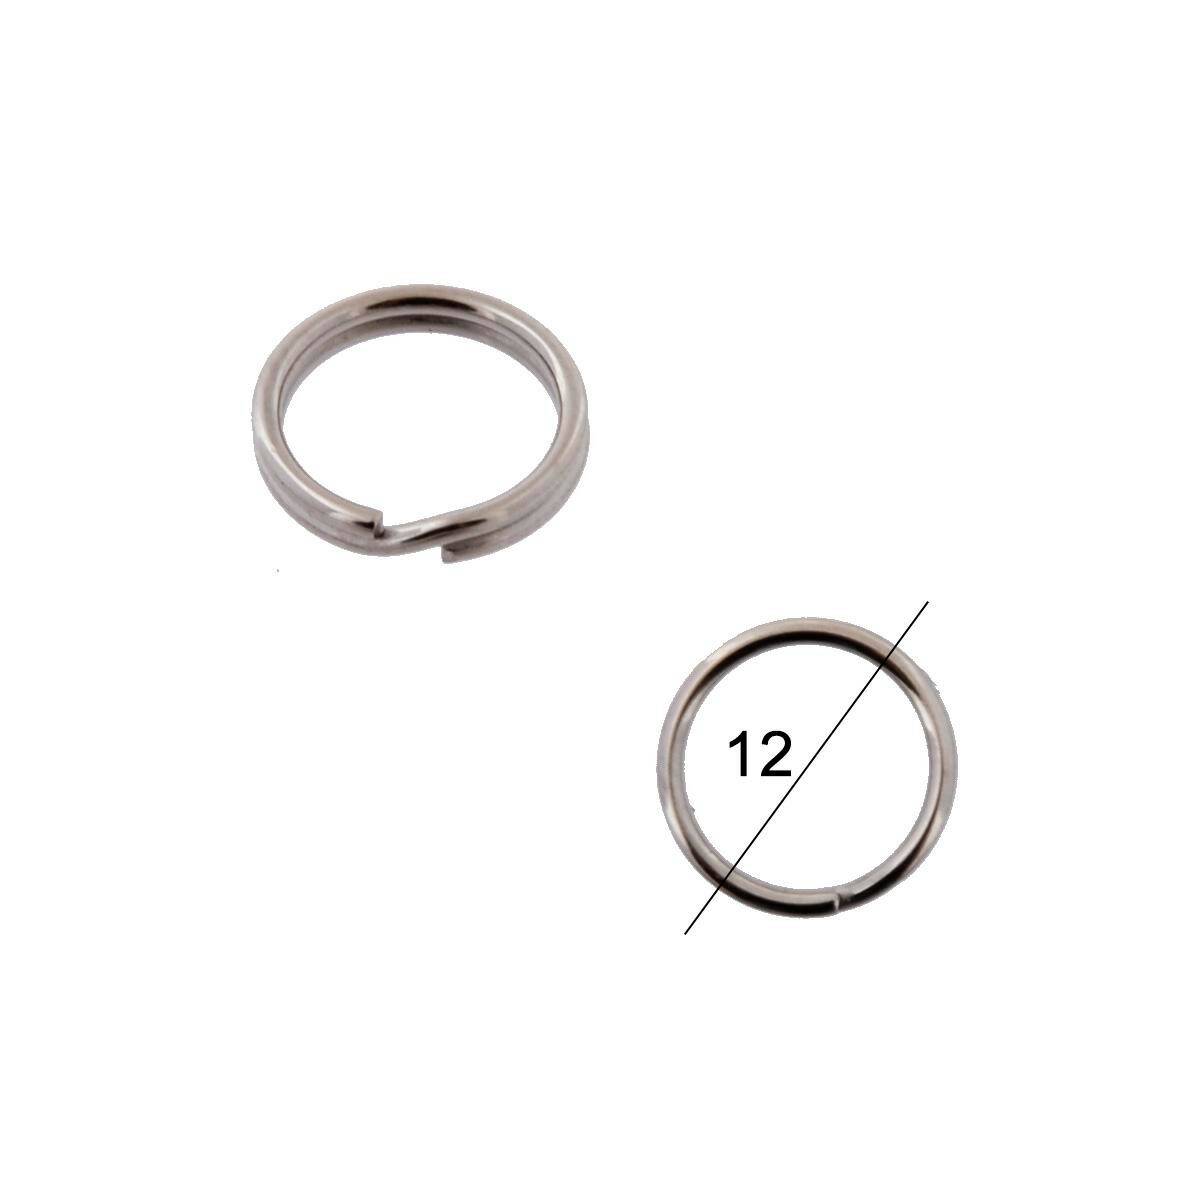 Key rings standard - diameter 12mm